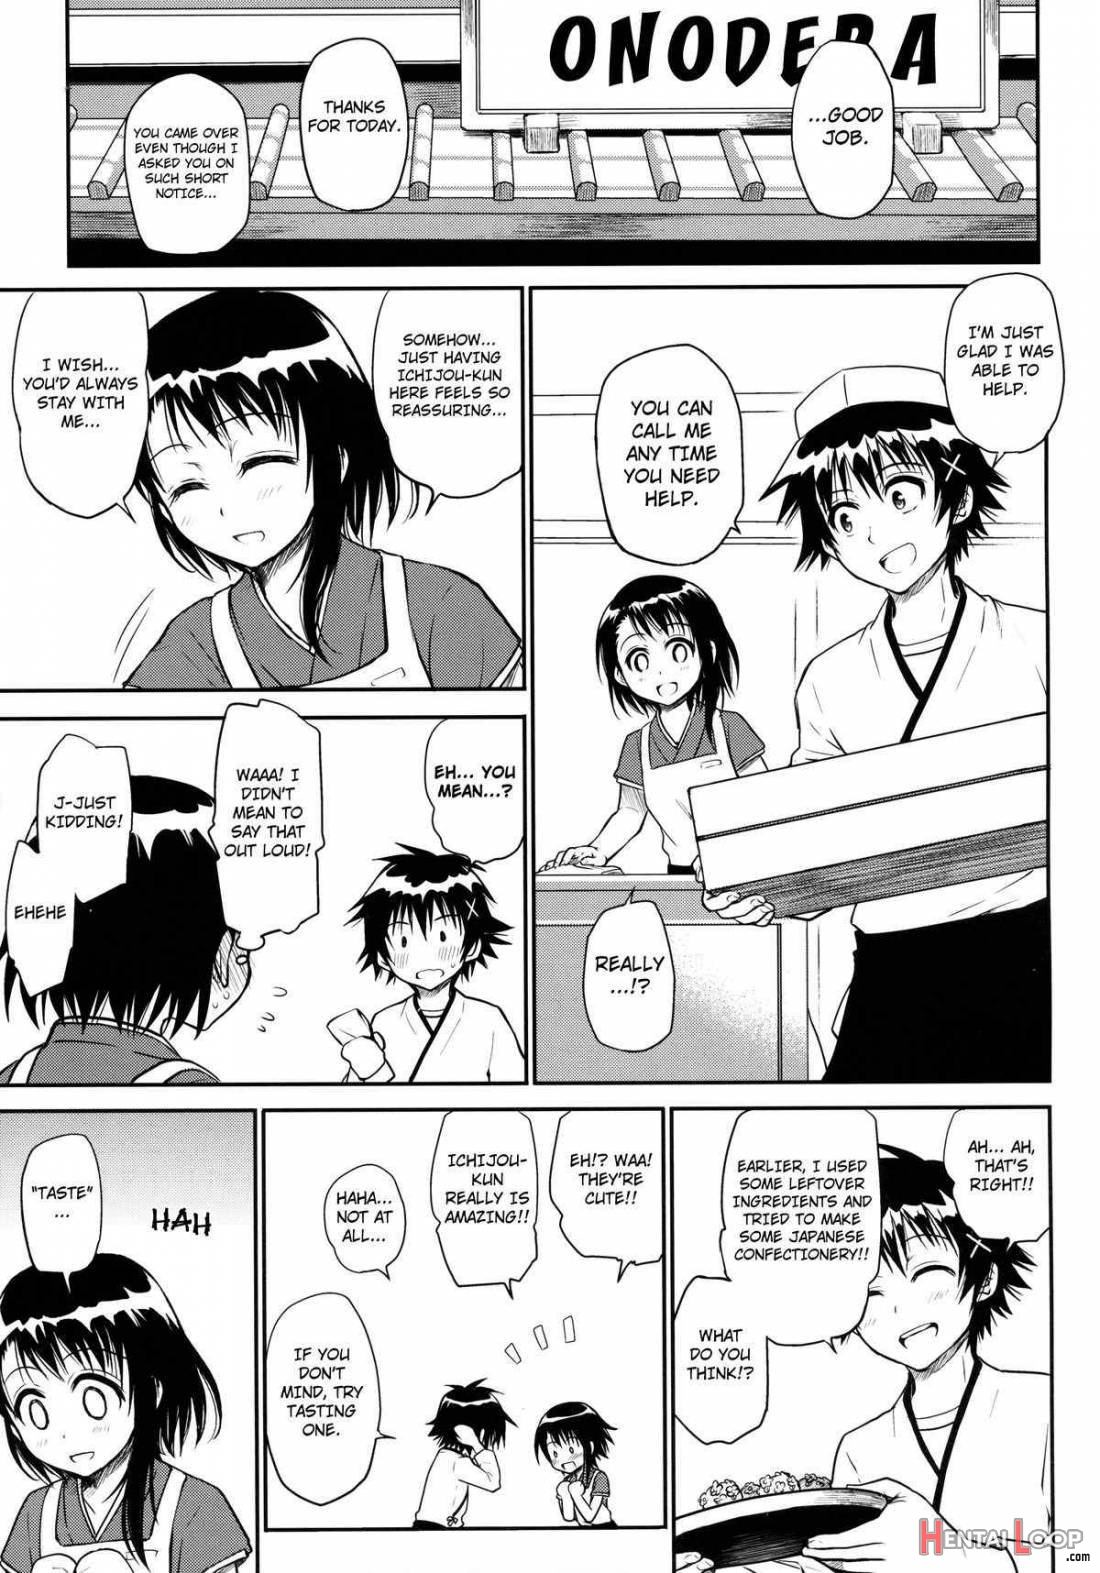 Kyou Mo Onodera-san page 4